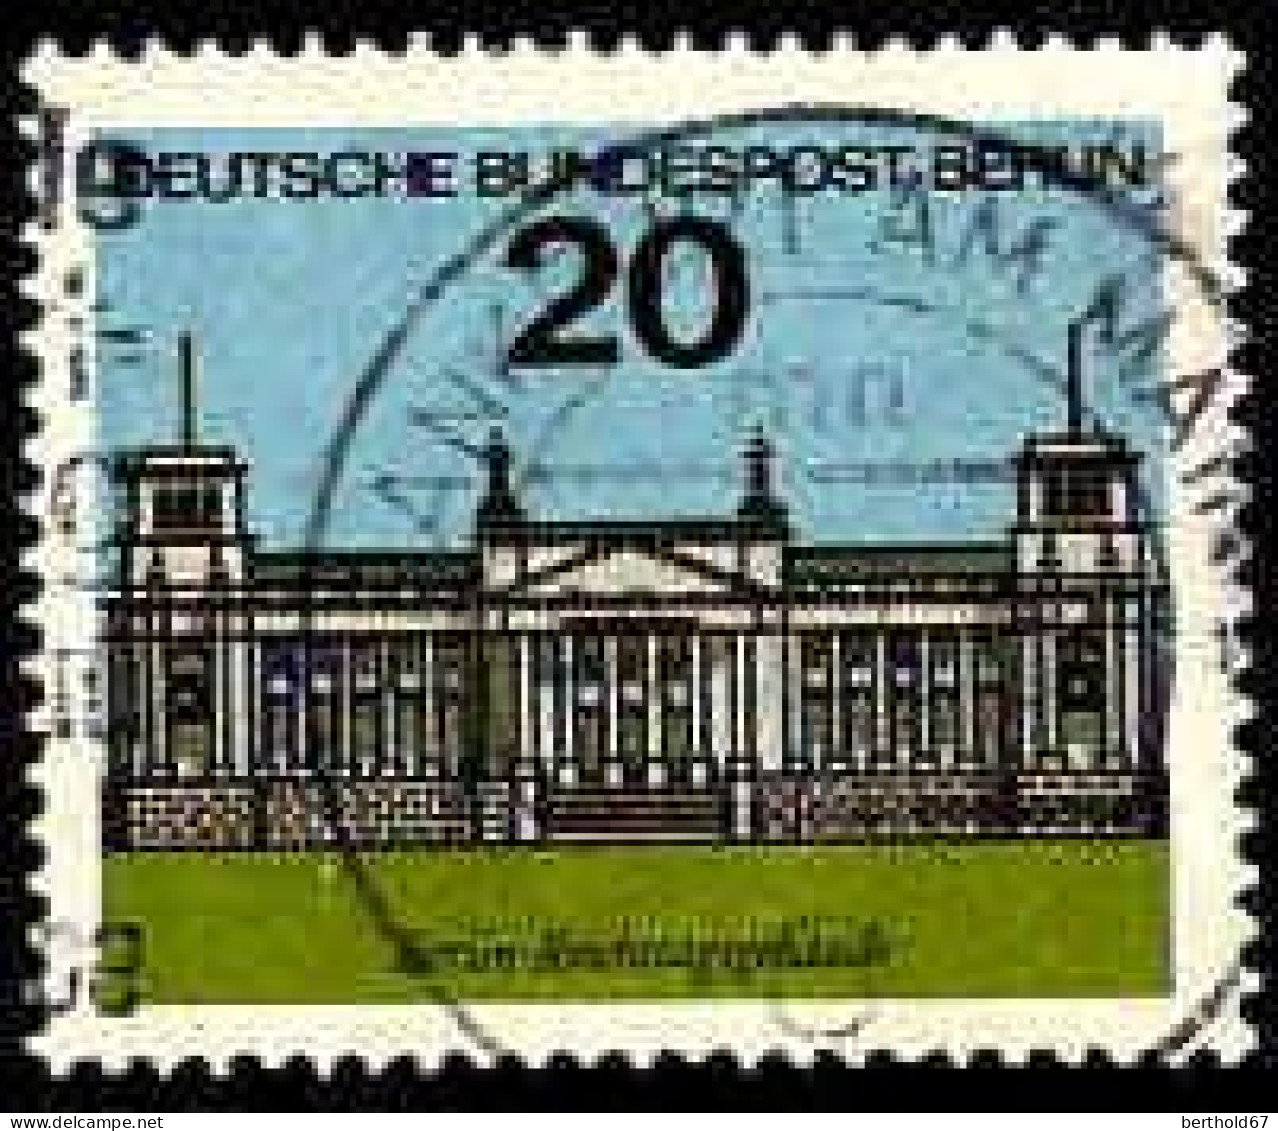 Berlin Poste Obl Yv:213 Mi:236 Berlin-Reichstagsgebäude (TB Cachet Rond) - Gebruikt